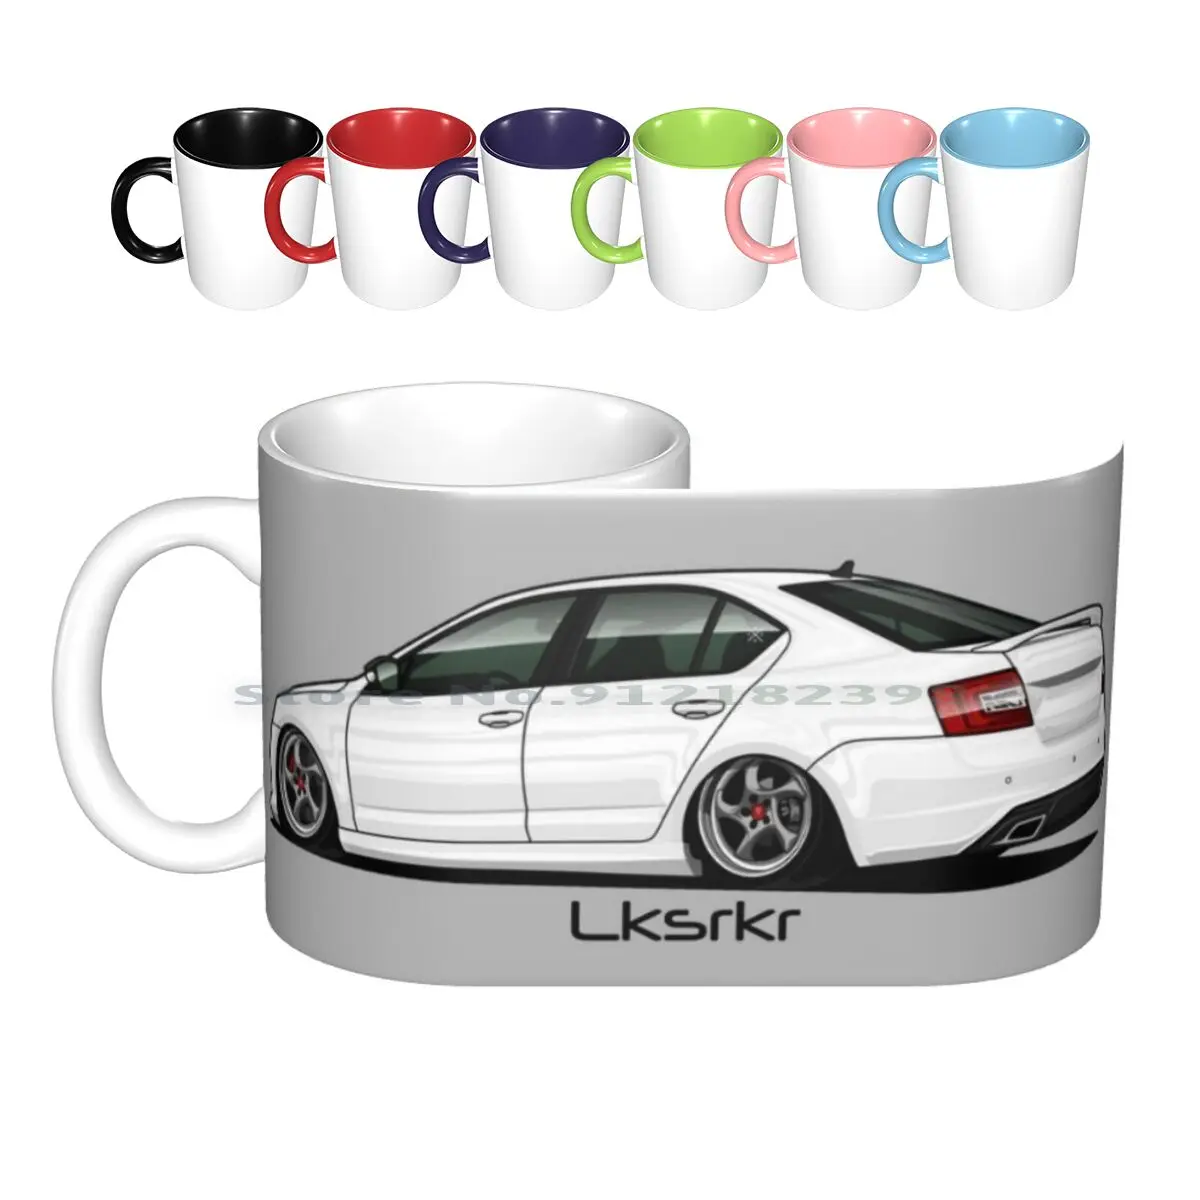 Skoda Octavia-Artwork Ceramic Mugs Coffee Cups Milk Tea Mug Lksrkr Car Cars Automobile Skoda Octavia Creative Trending Vintage